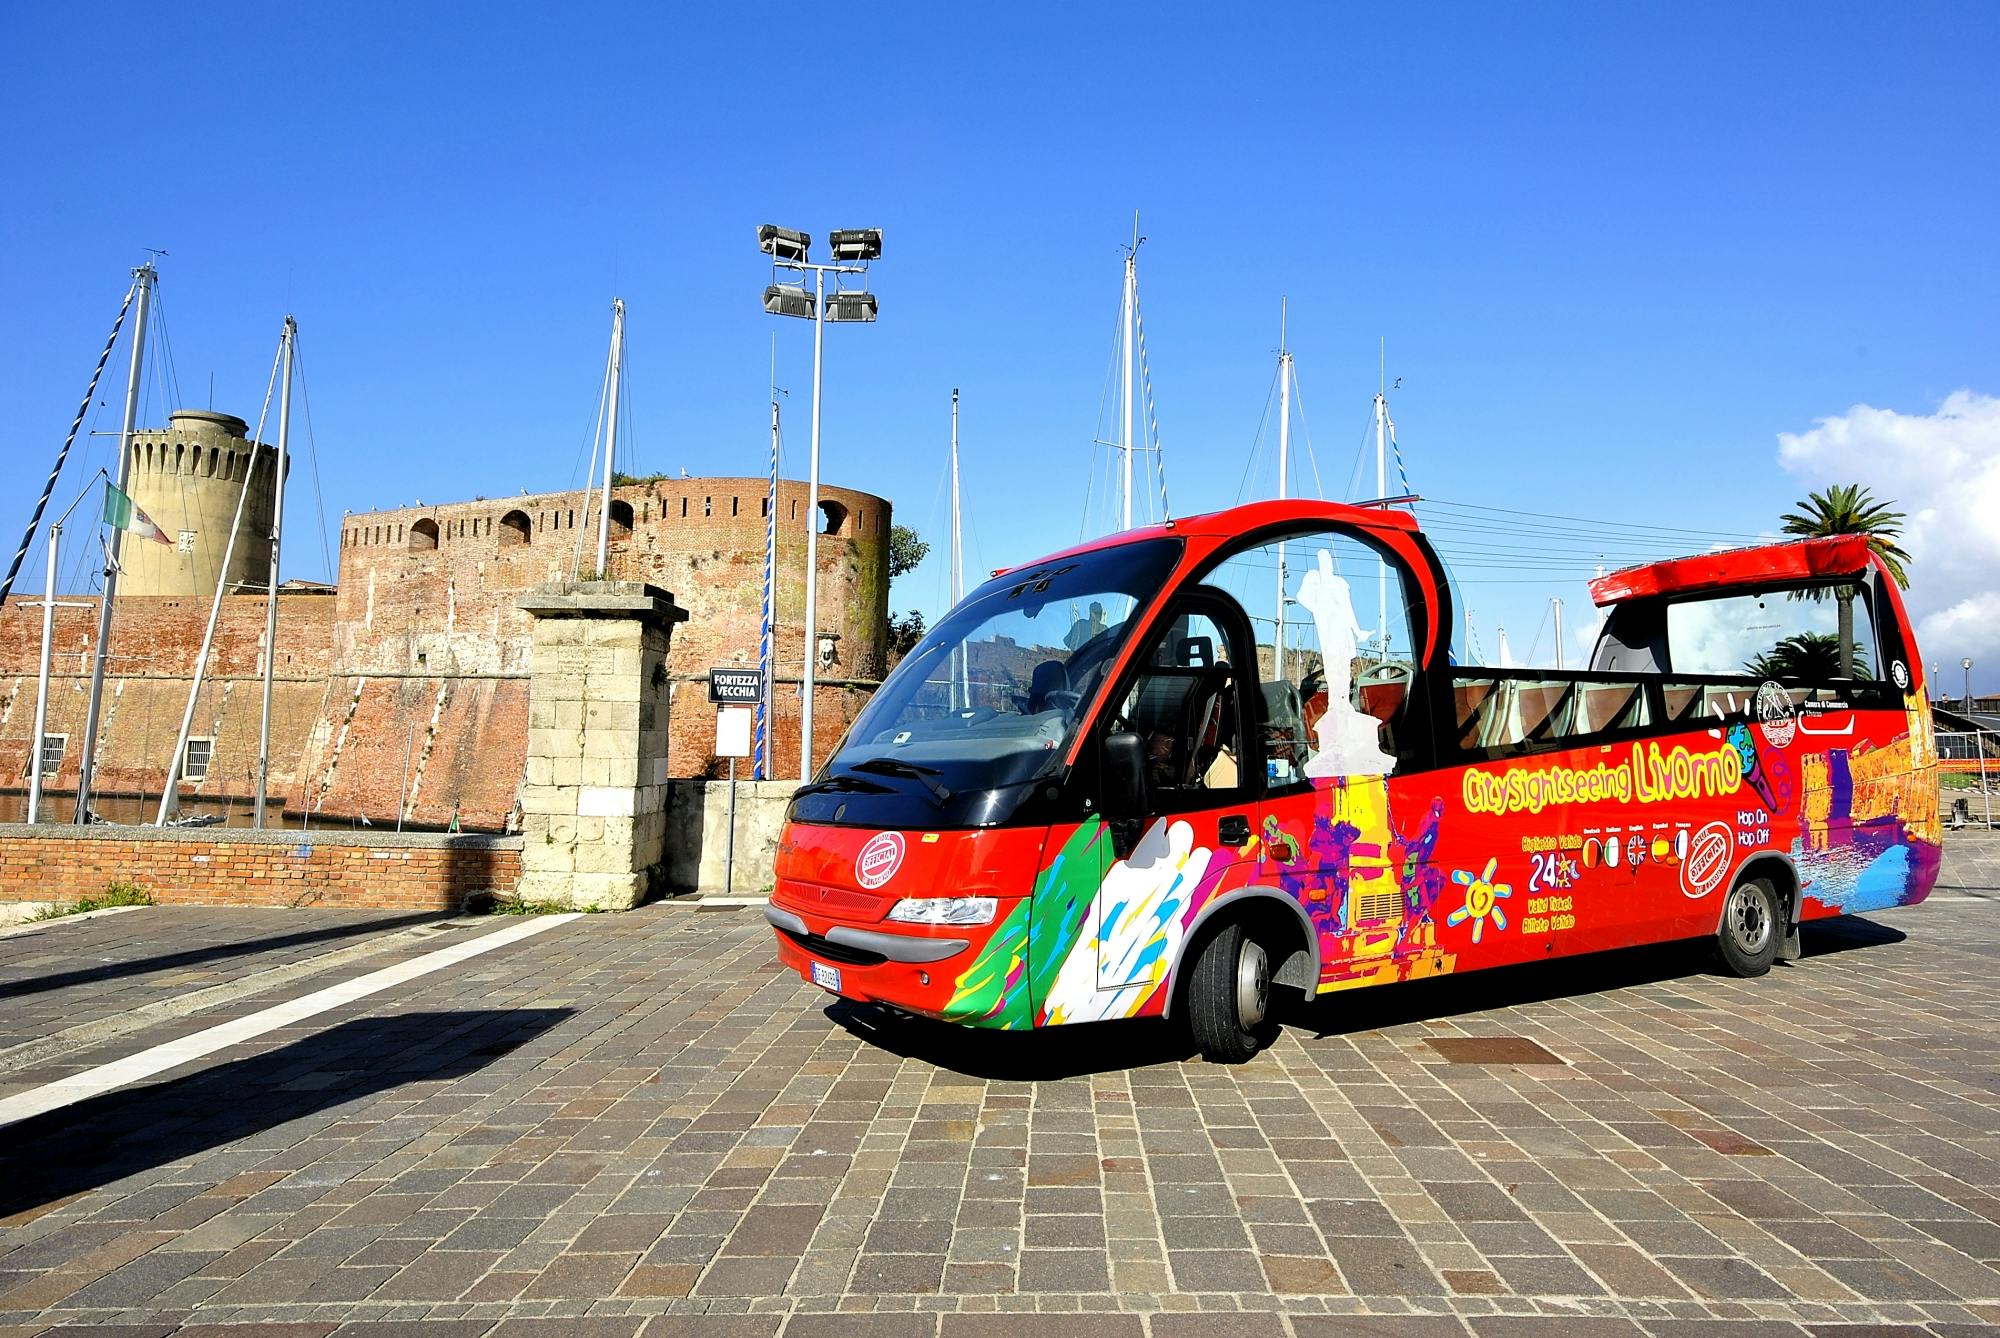 Livorno hop-on hop-off bus 24-uurs tickets